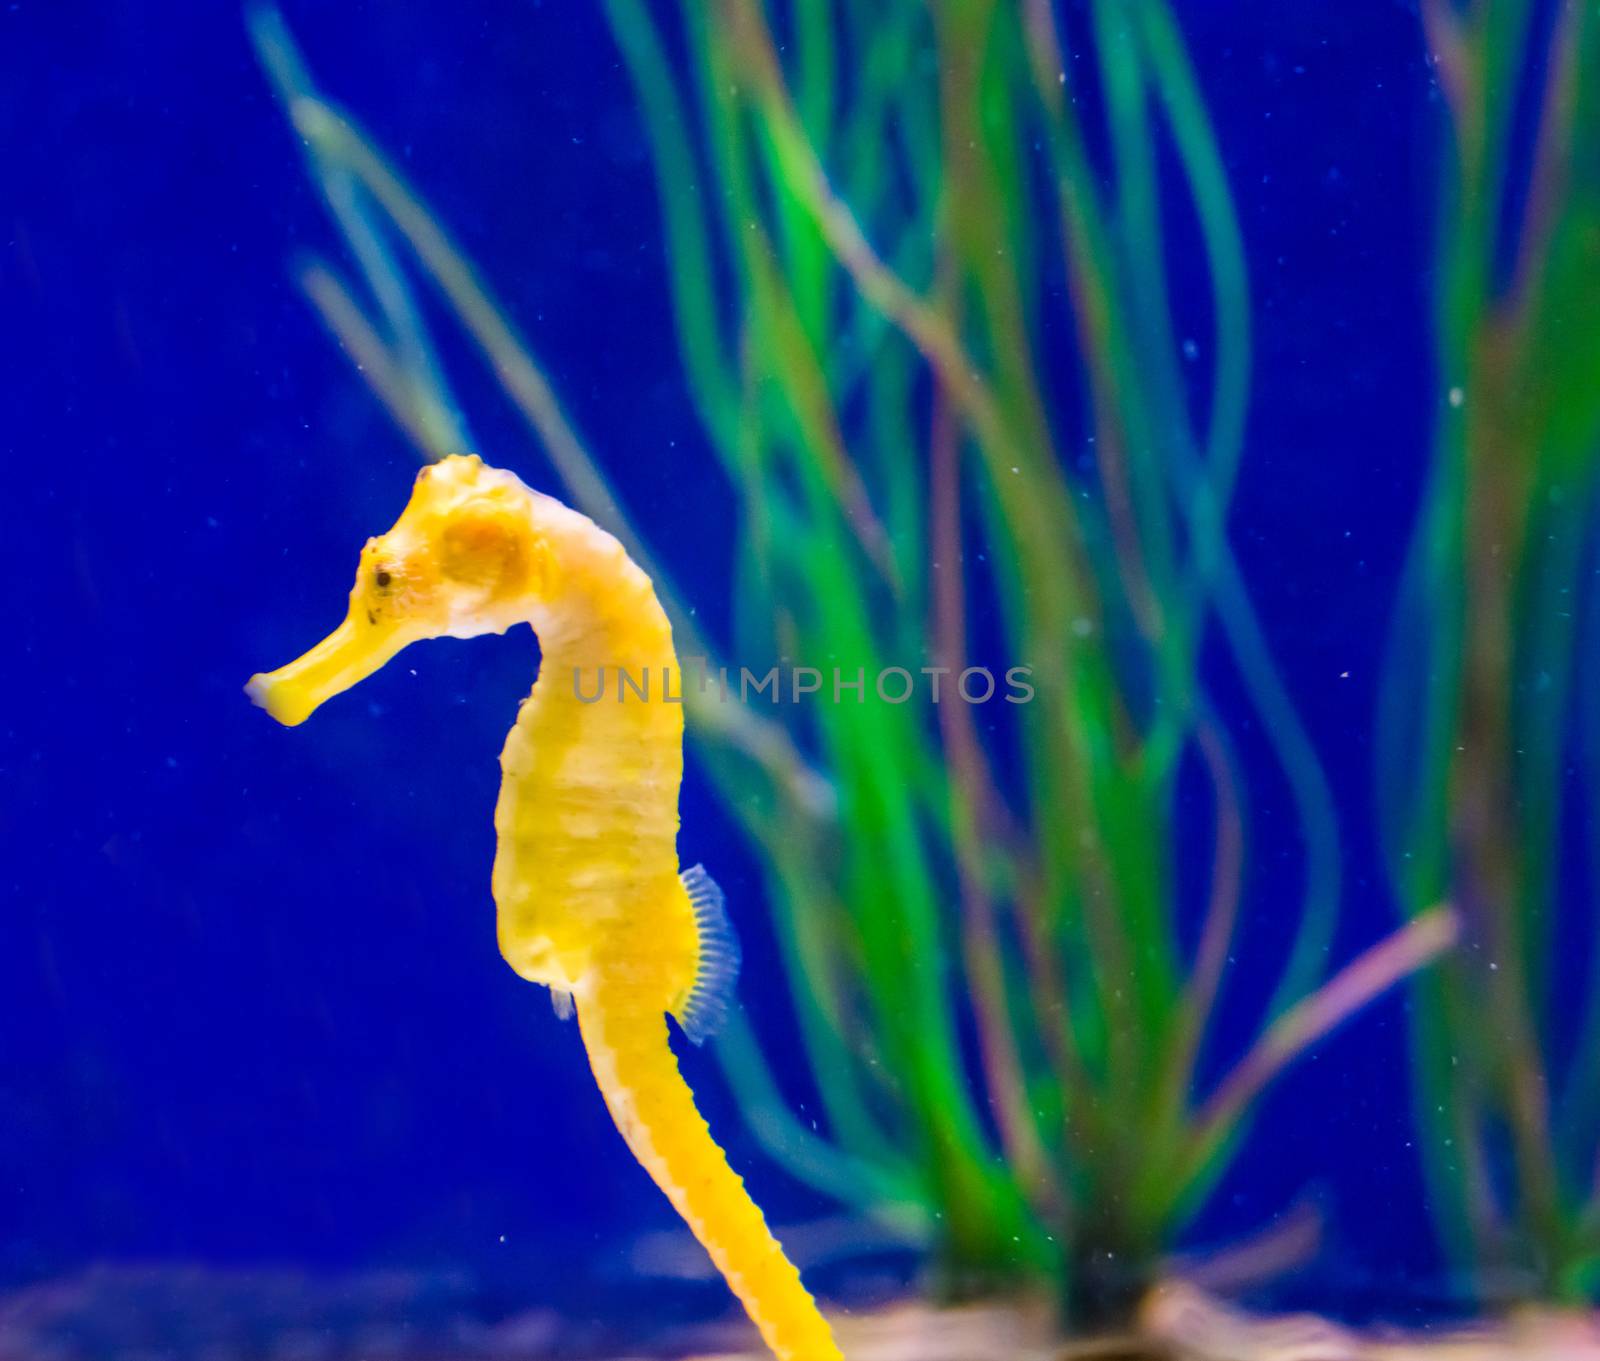 marine life fish portrait of a common yellow estuary seahorse in macro closeup by charlottebleijenberg